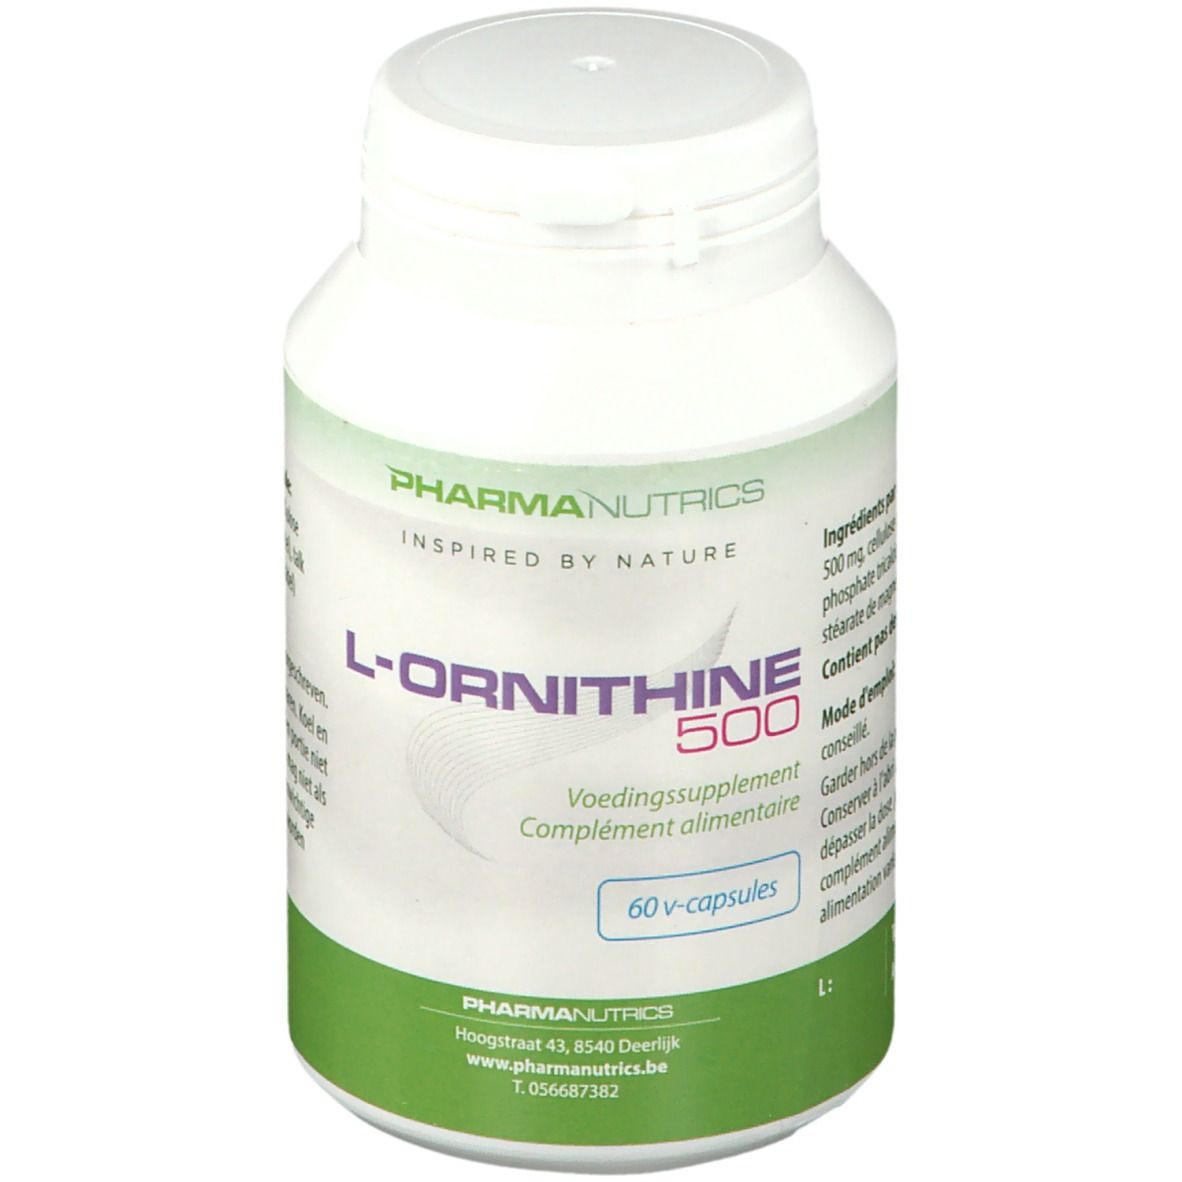 PharmaNutrics L-Ornithine 500